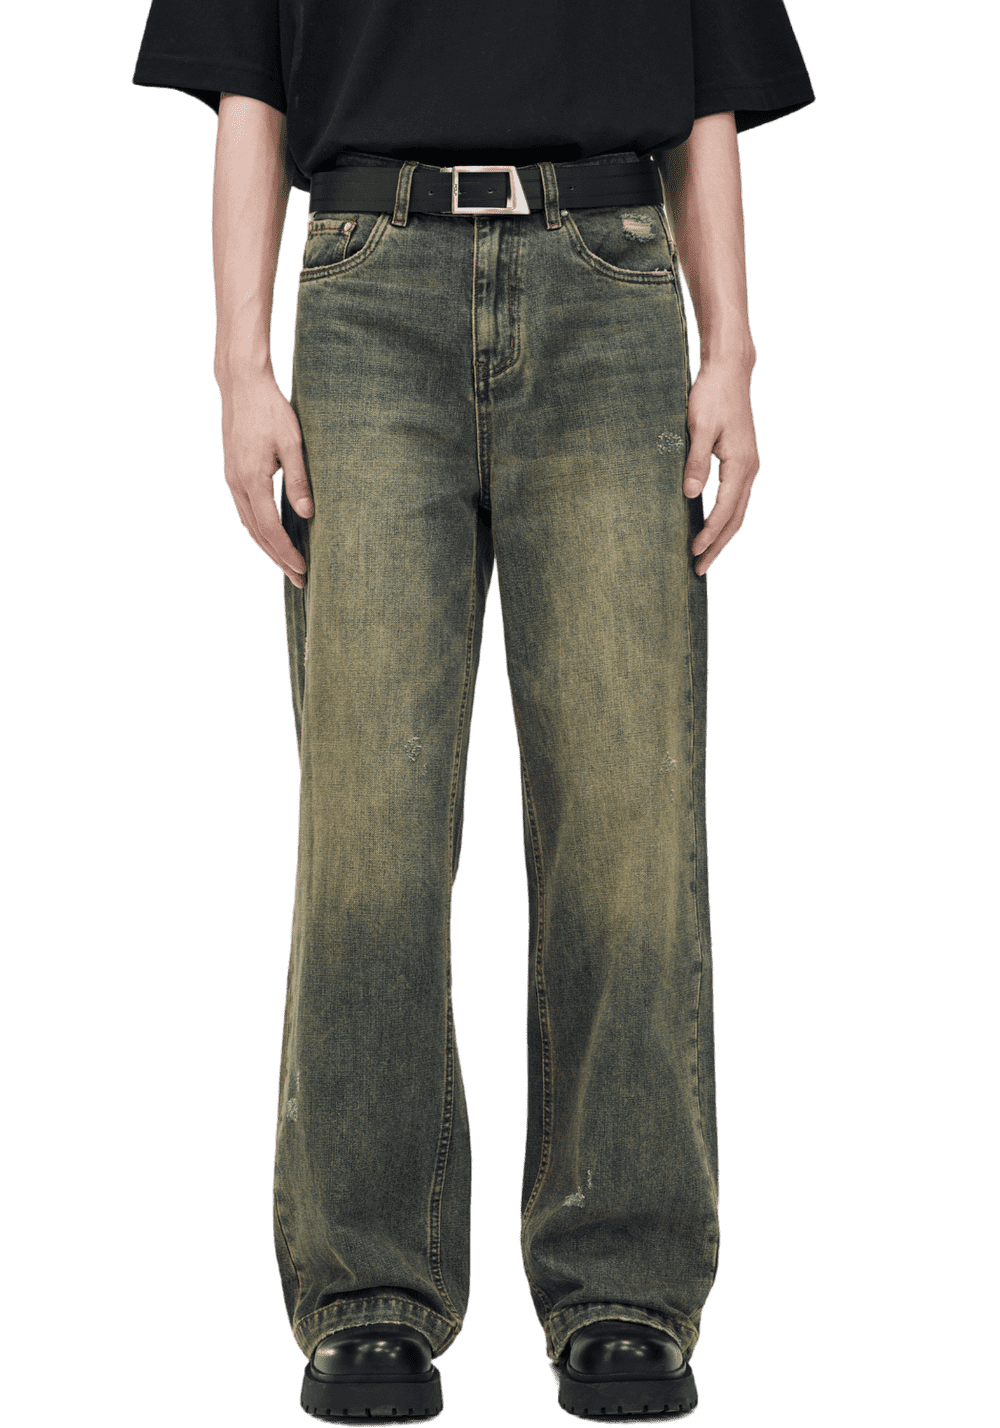 Yellow Mud Distressed Jeans - PSYLOS 1, Yellow Mud Distressed Jeans, Pants, PCLP, PSYLOS 1